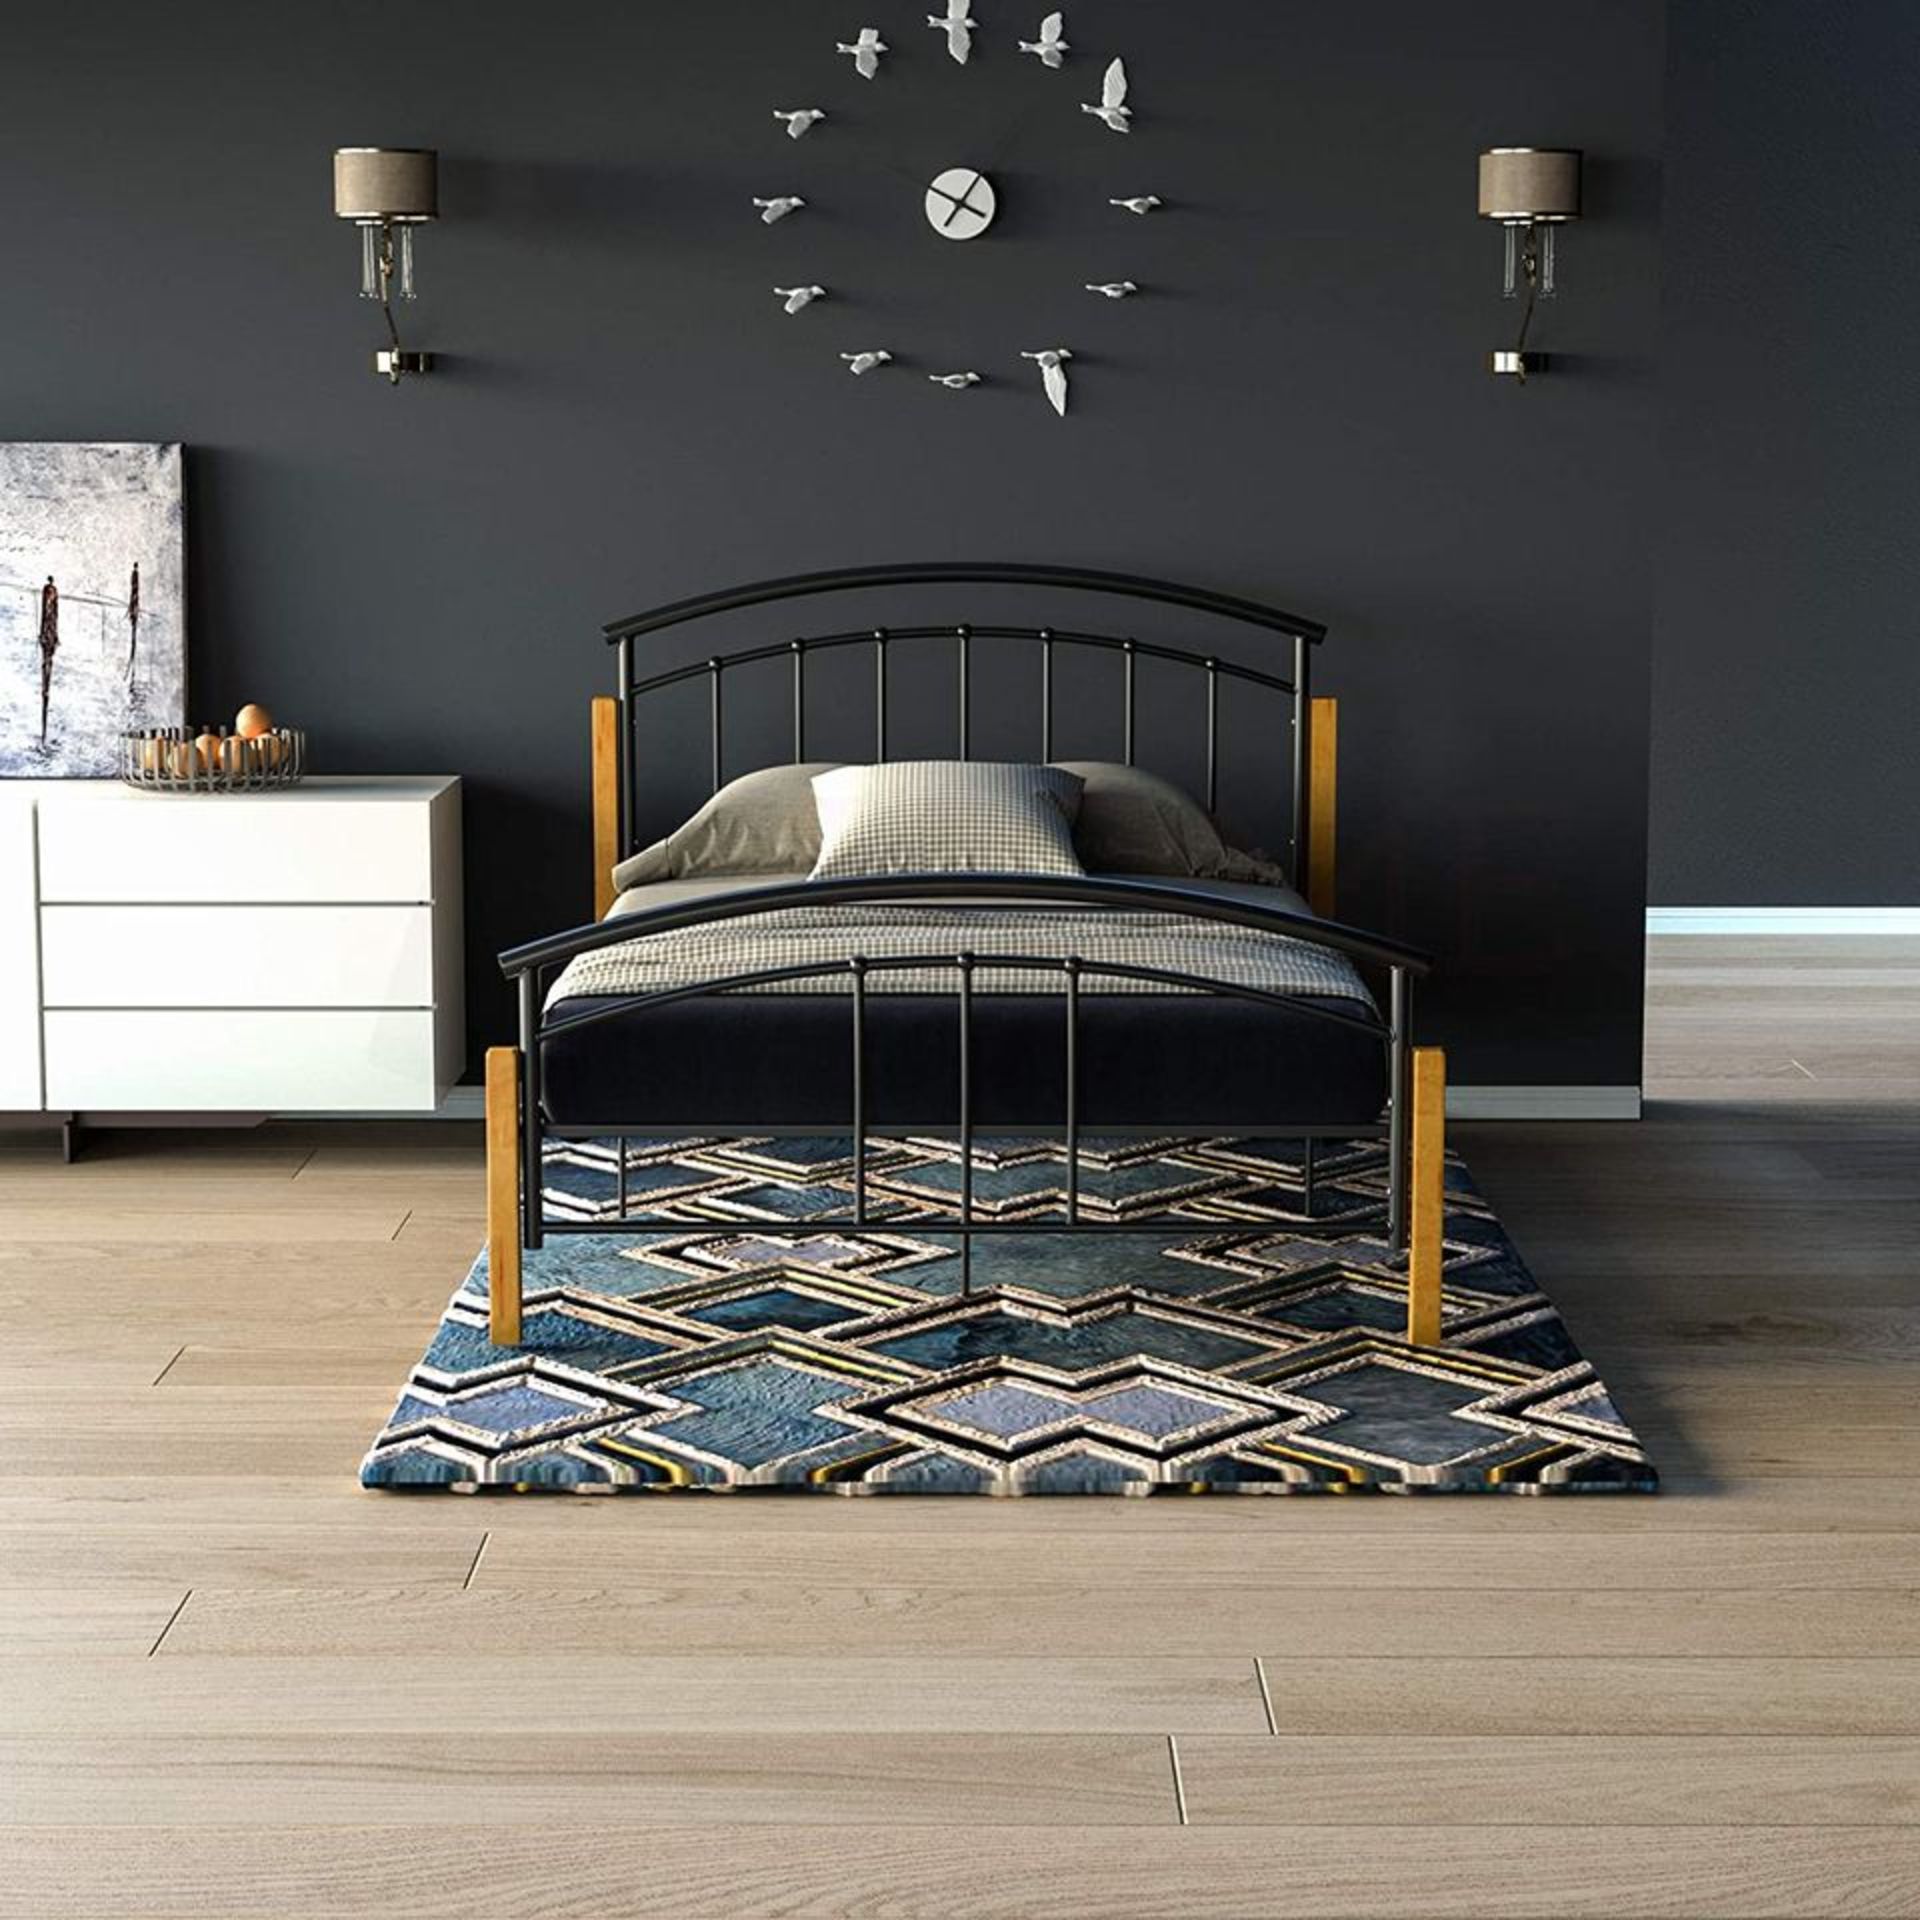 Vida Designs Venice Double Bed, Frame Metal & Wood Solid Headboard Low Foot End, Black - Image 4 of 5